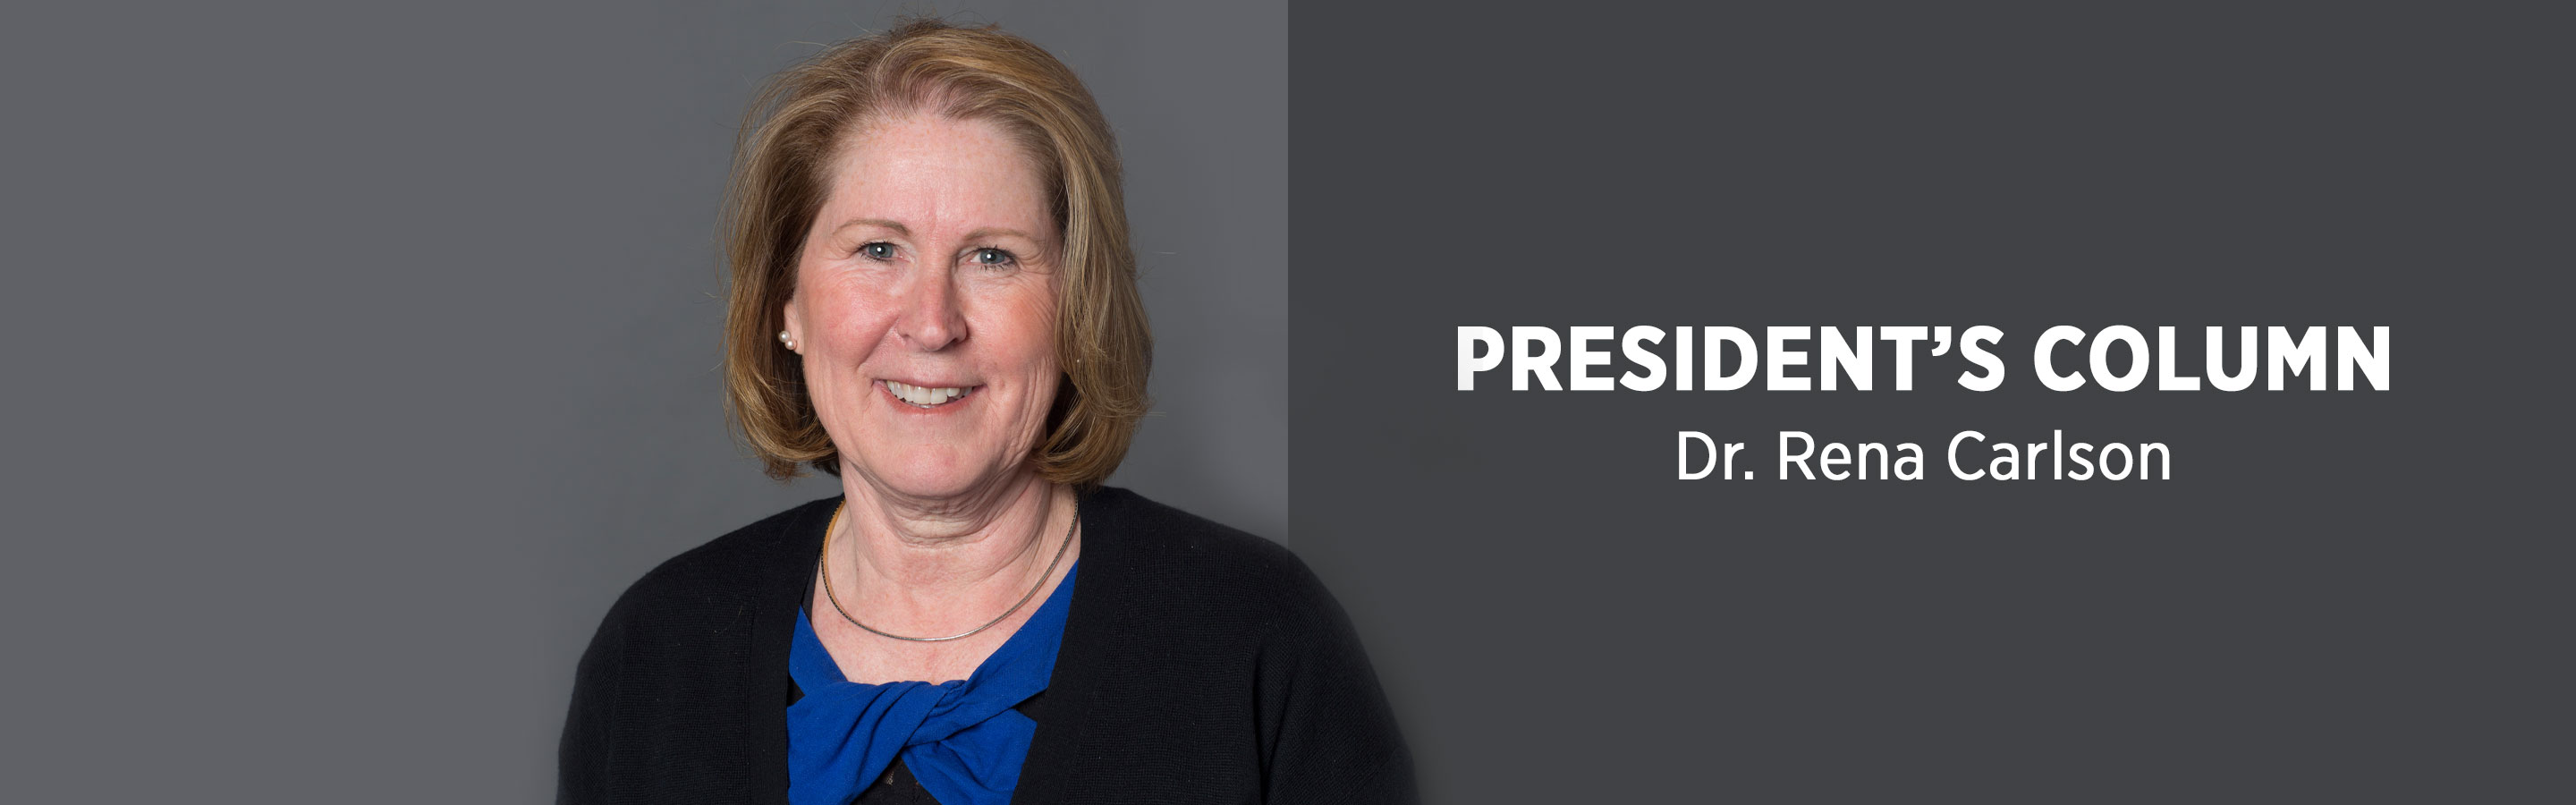 President's column - Dr. Rena Carlson